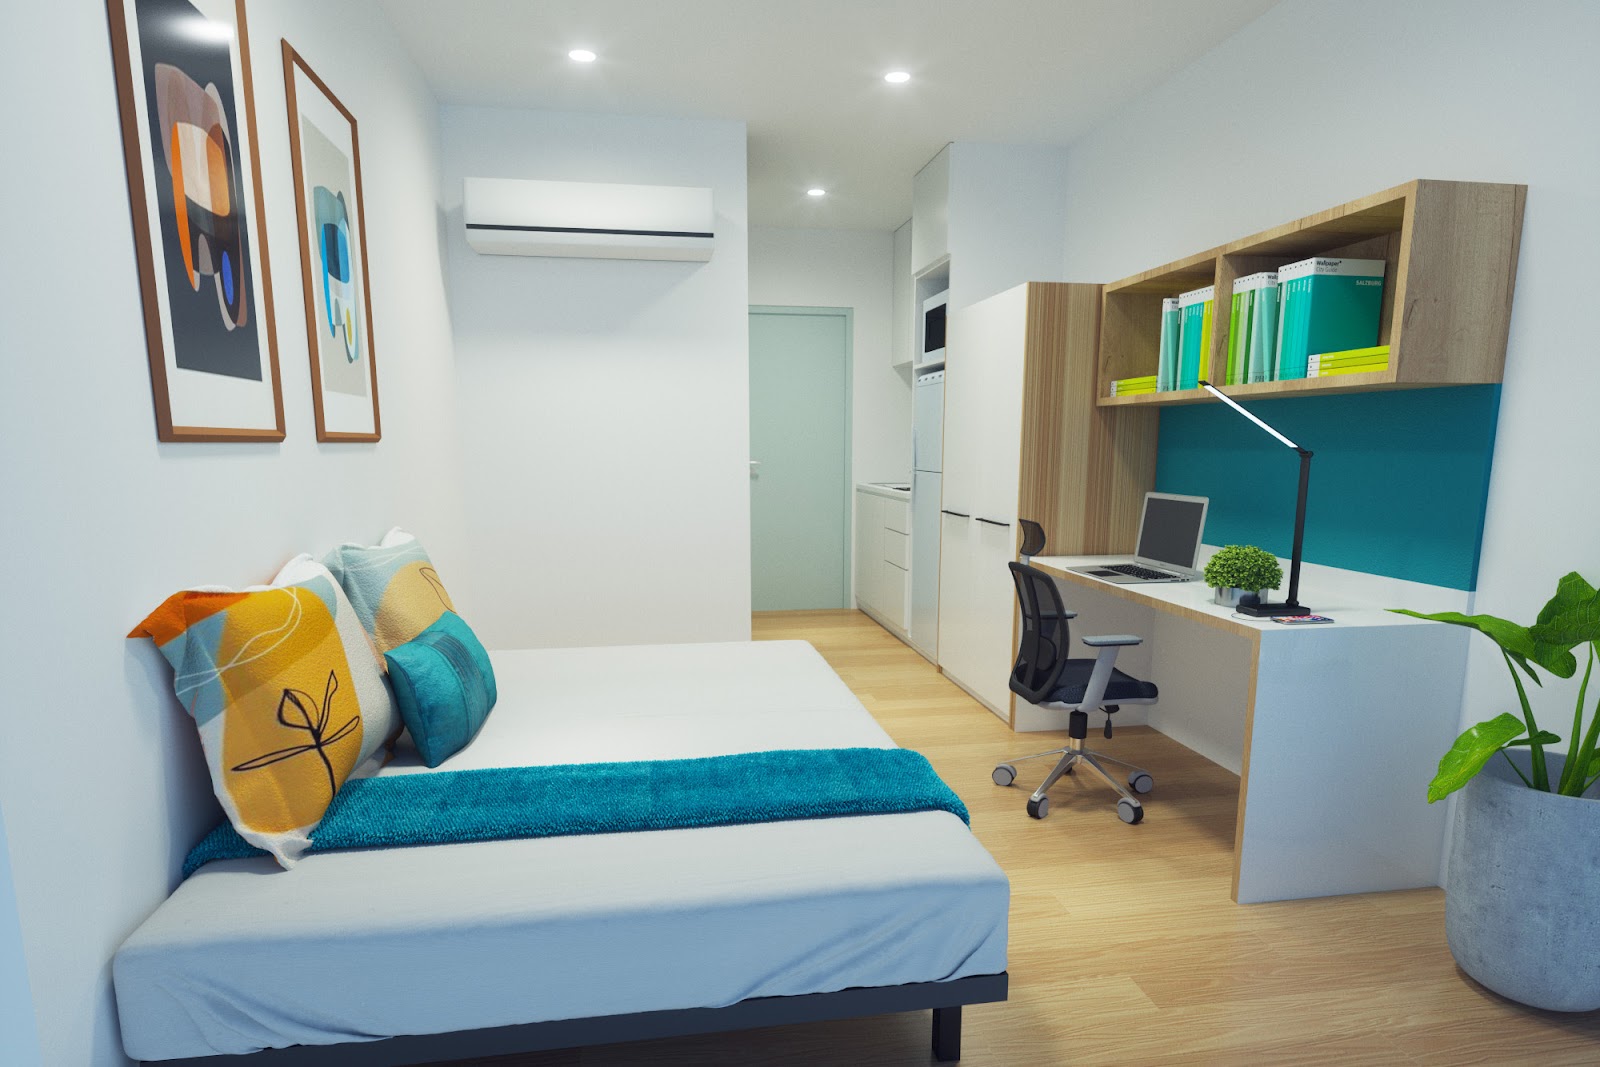 Studio Apartments in Australia for students